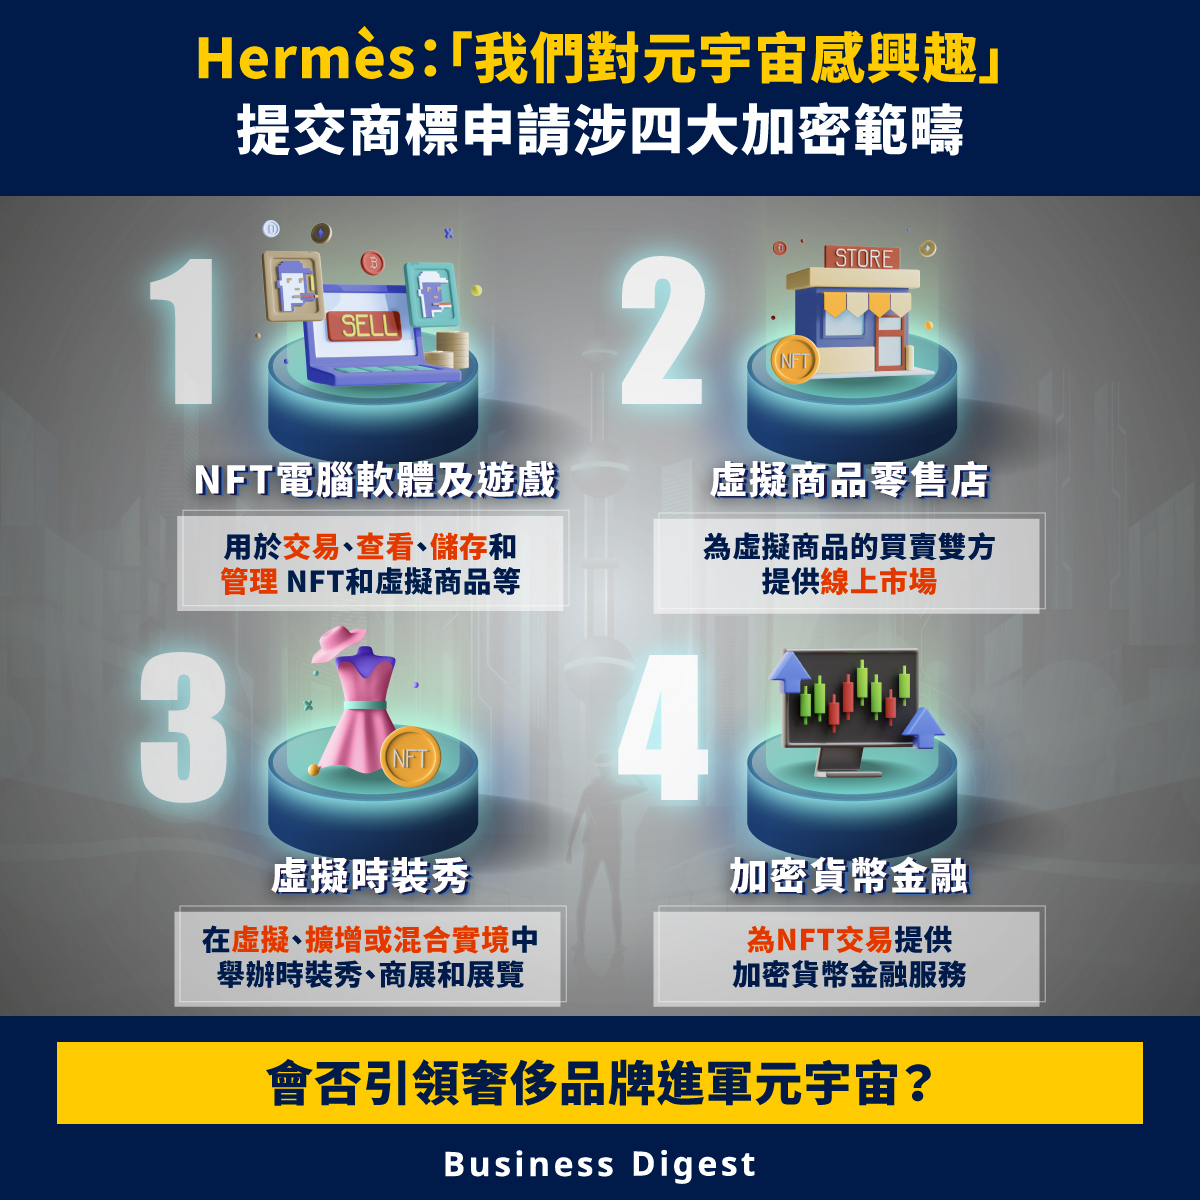 【Web3商機】Hermès：「我們對元宇宙感興趣」提交商標申請涉四大加密範疇